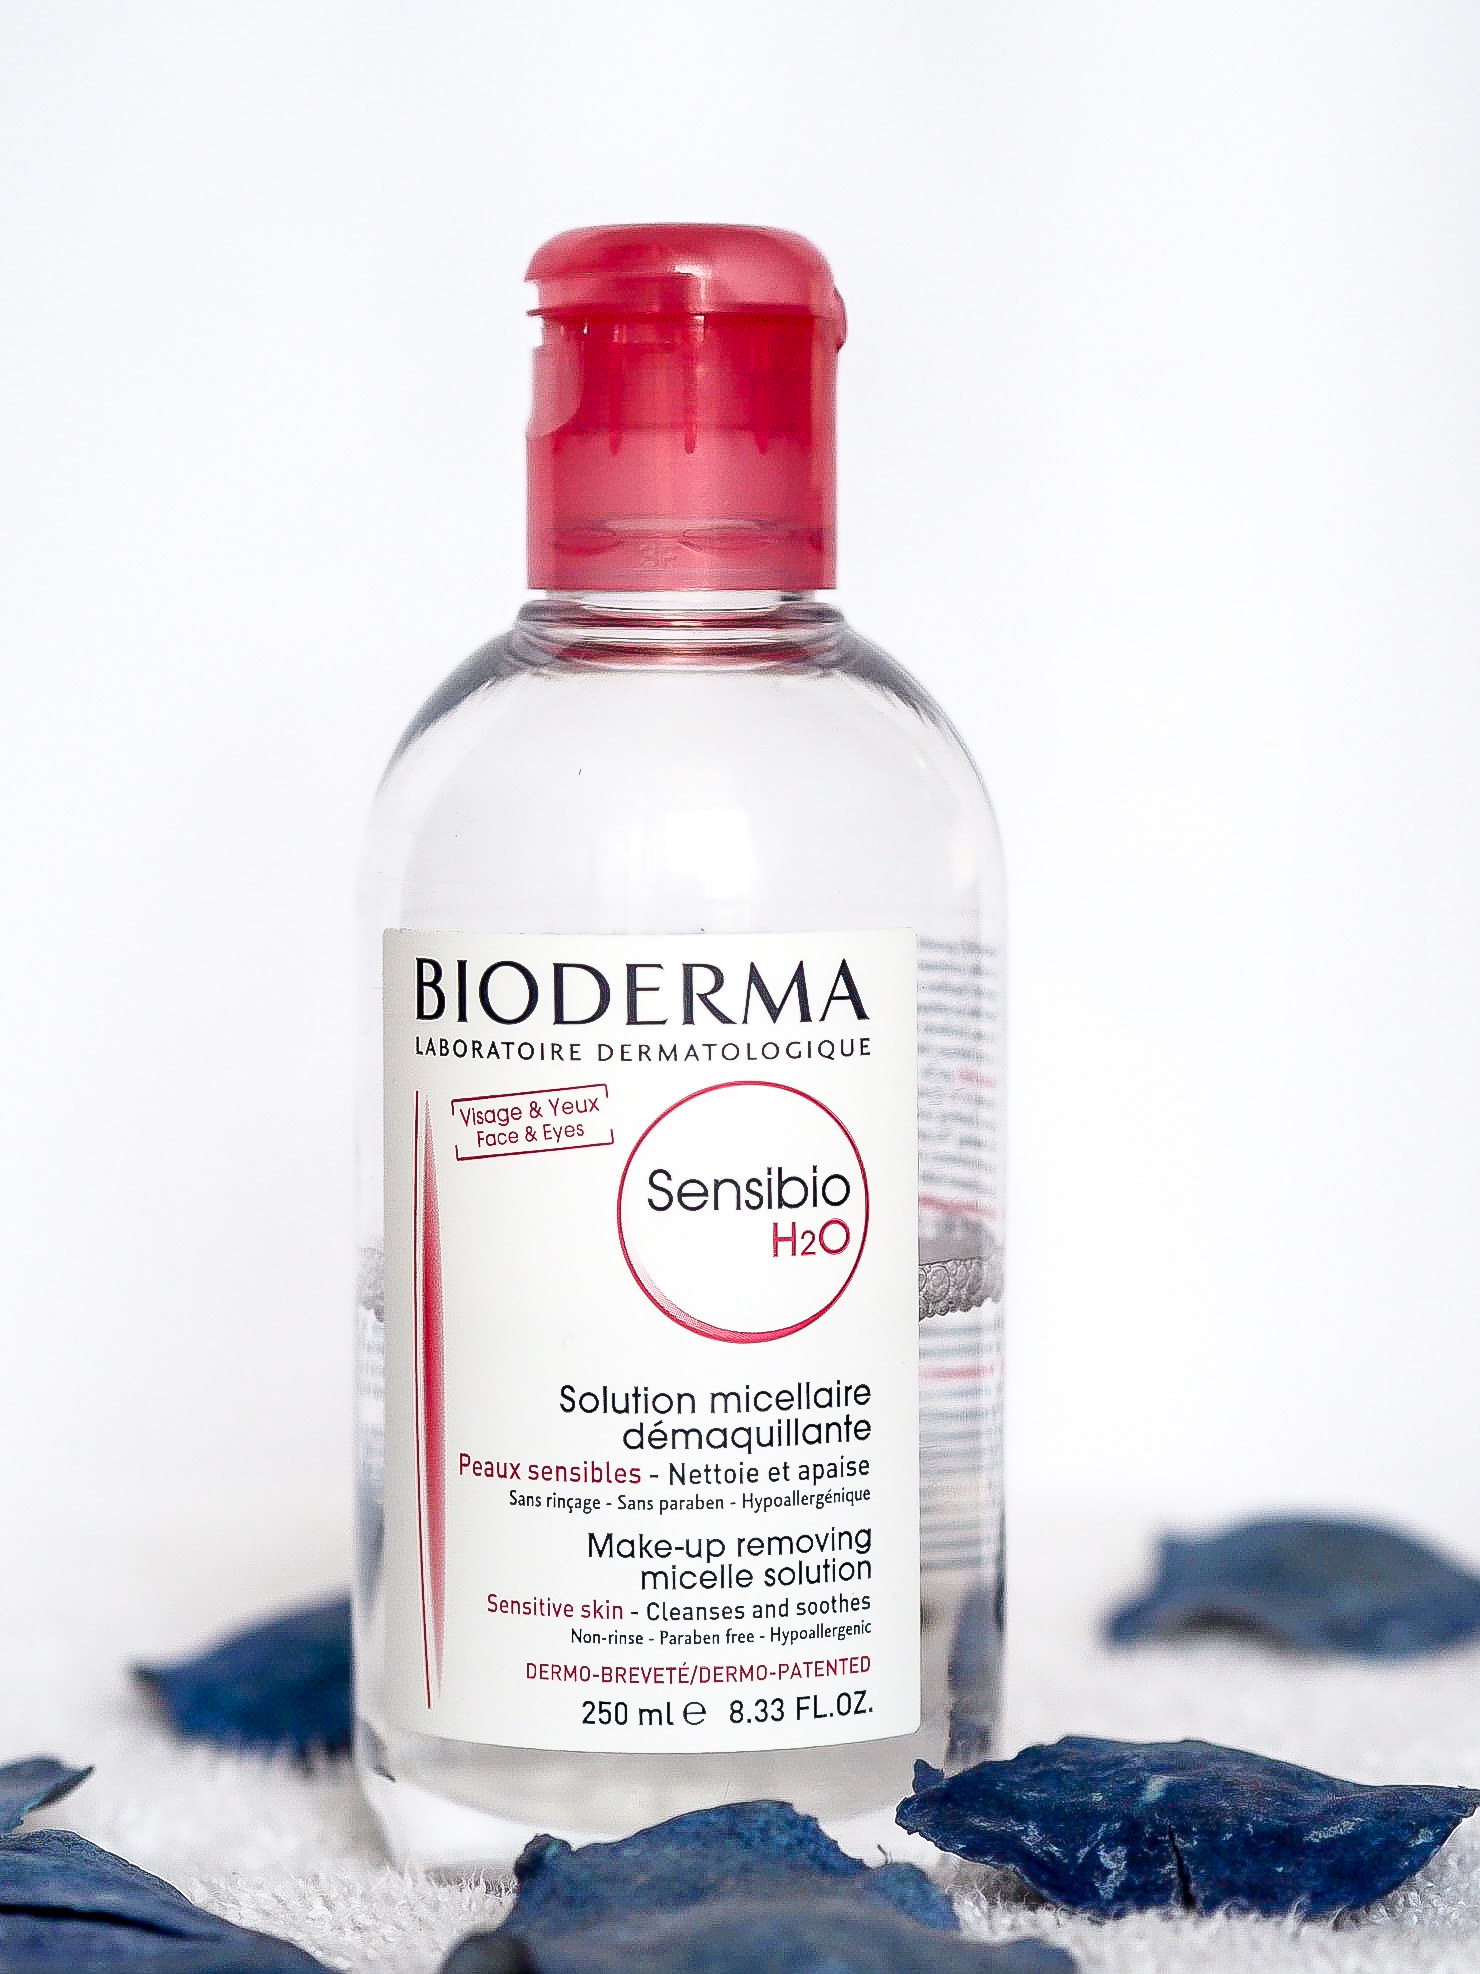 Bioderma sensibio H2O micellar solution review 